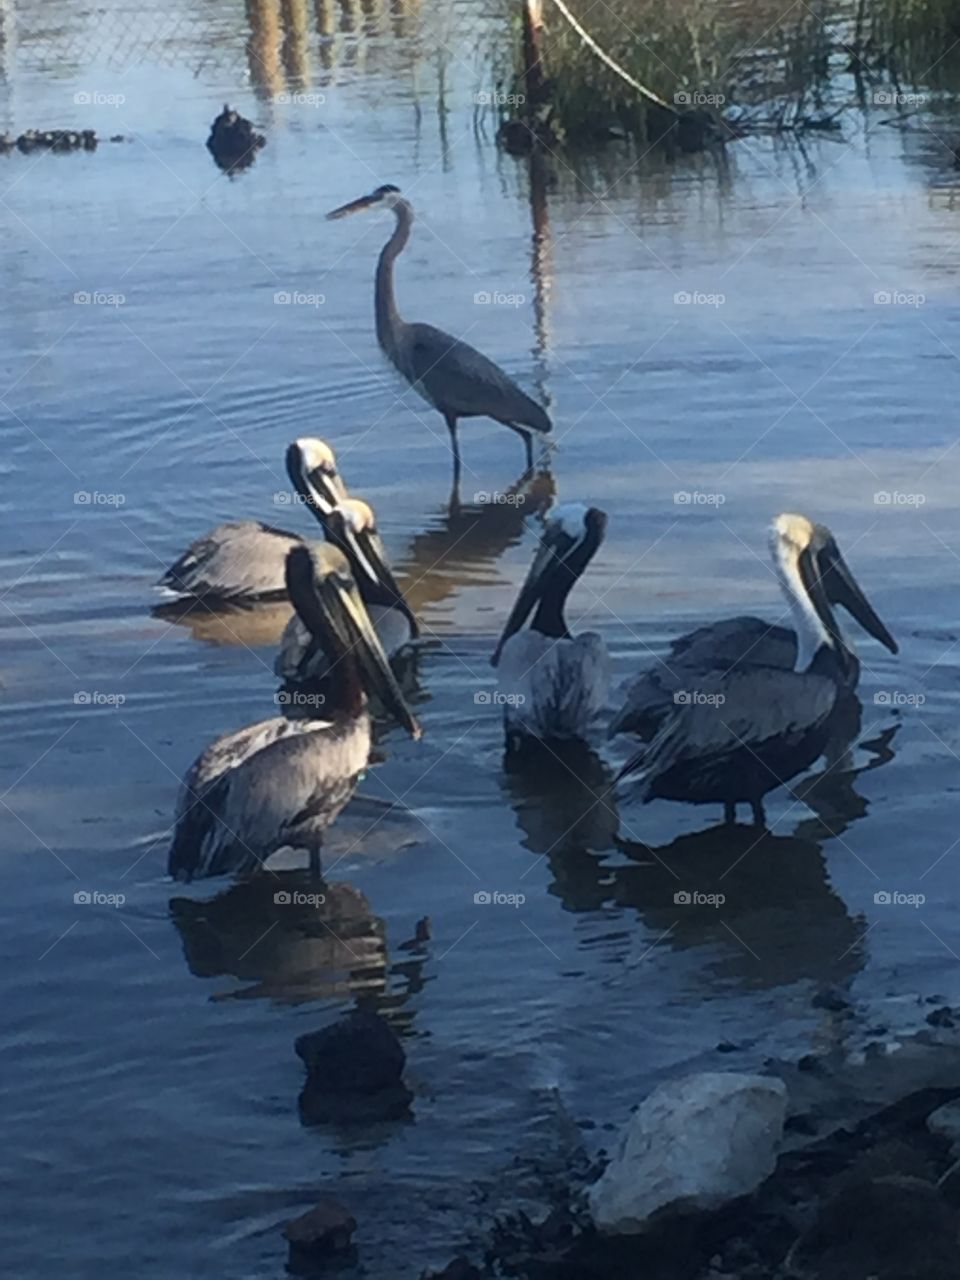 Birds in a marsh